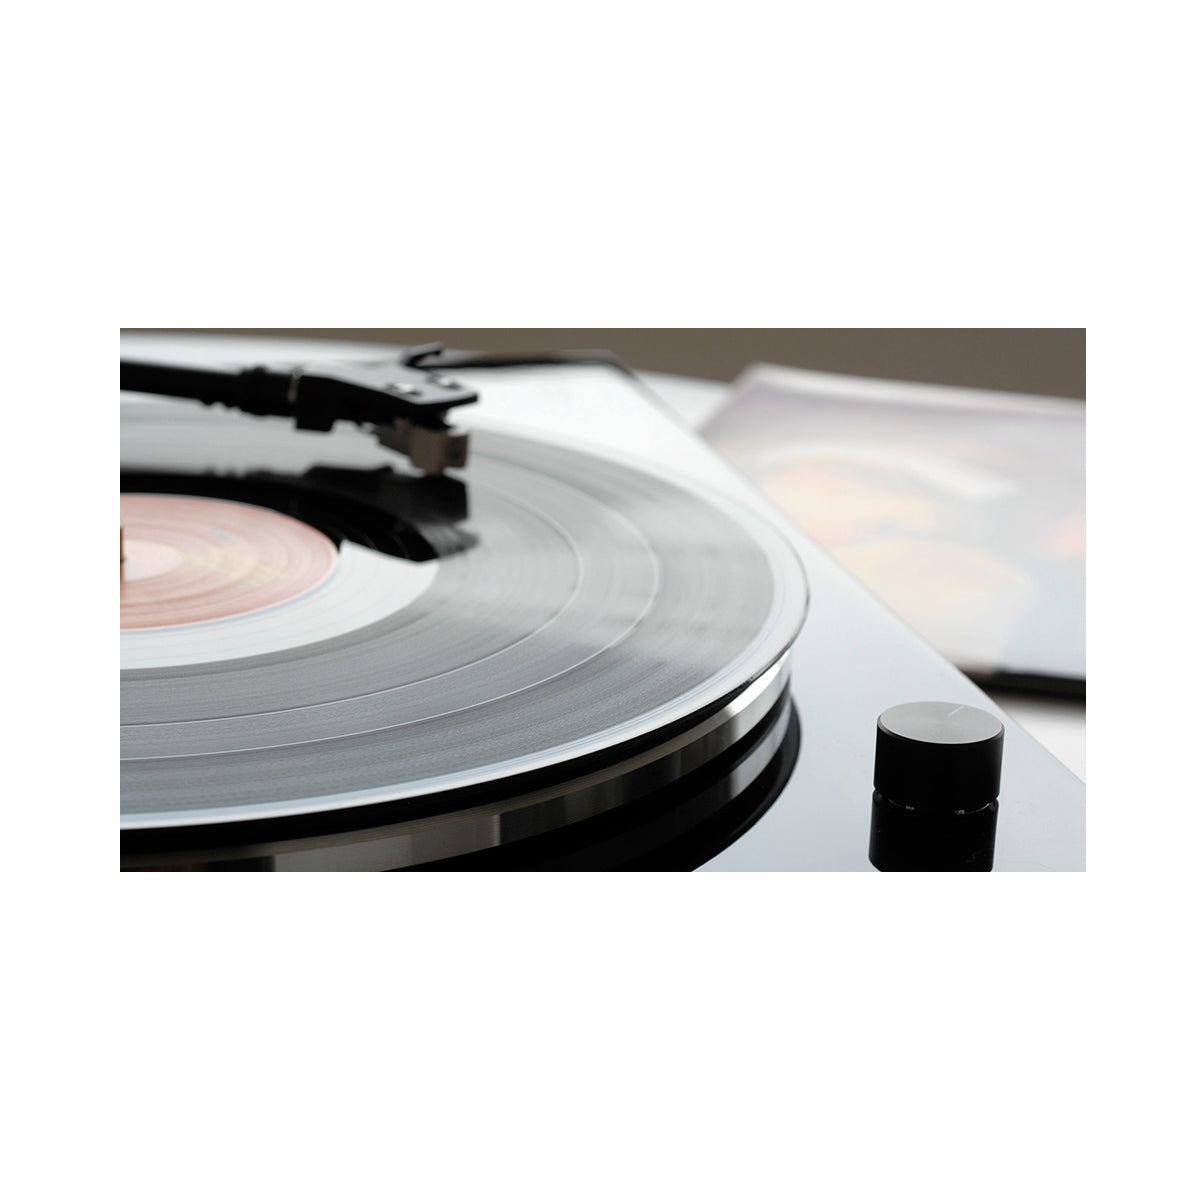 Music Hall MMF-1.3 Turntable Black - The Audio Experts